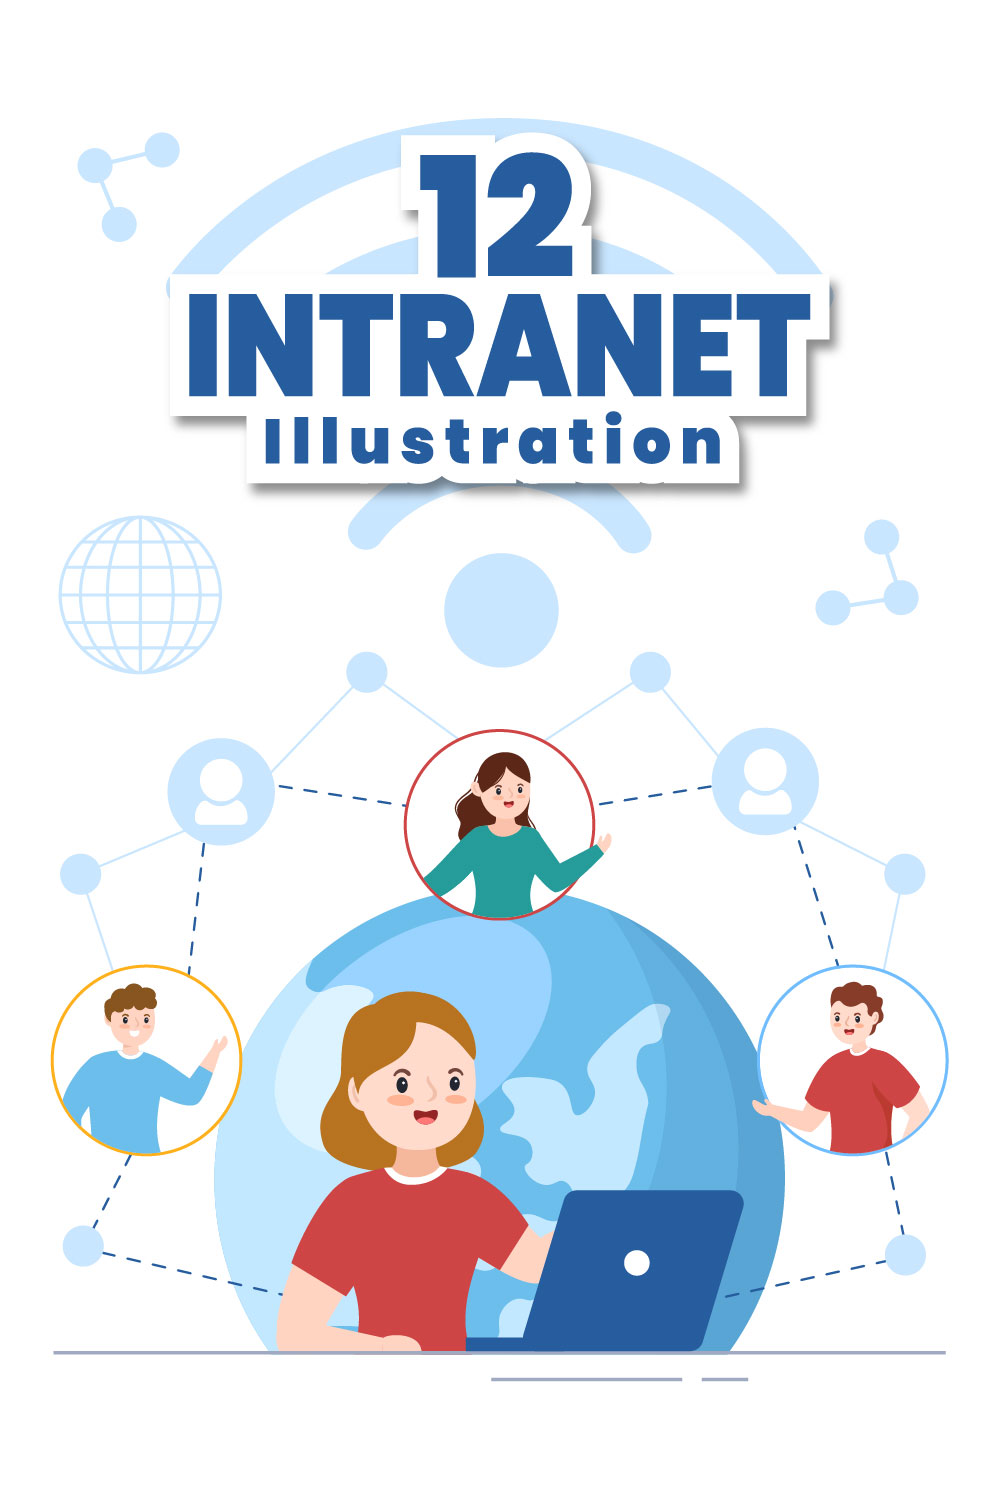 Network Connection Illustration pinterest image.